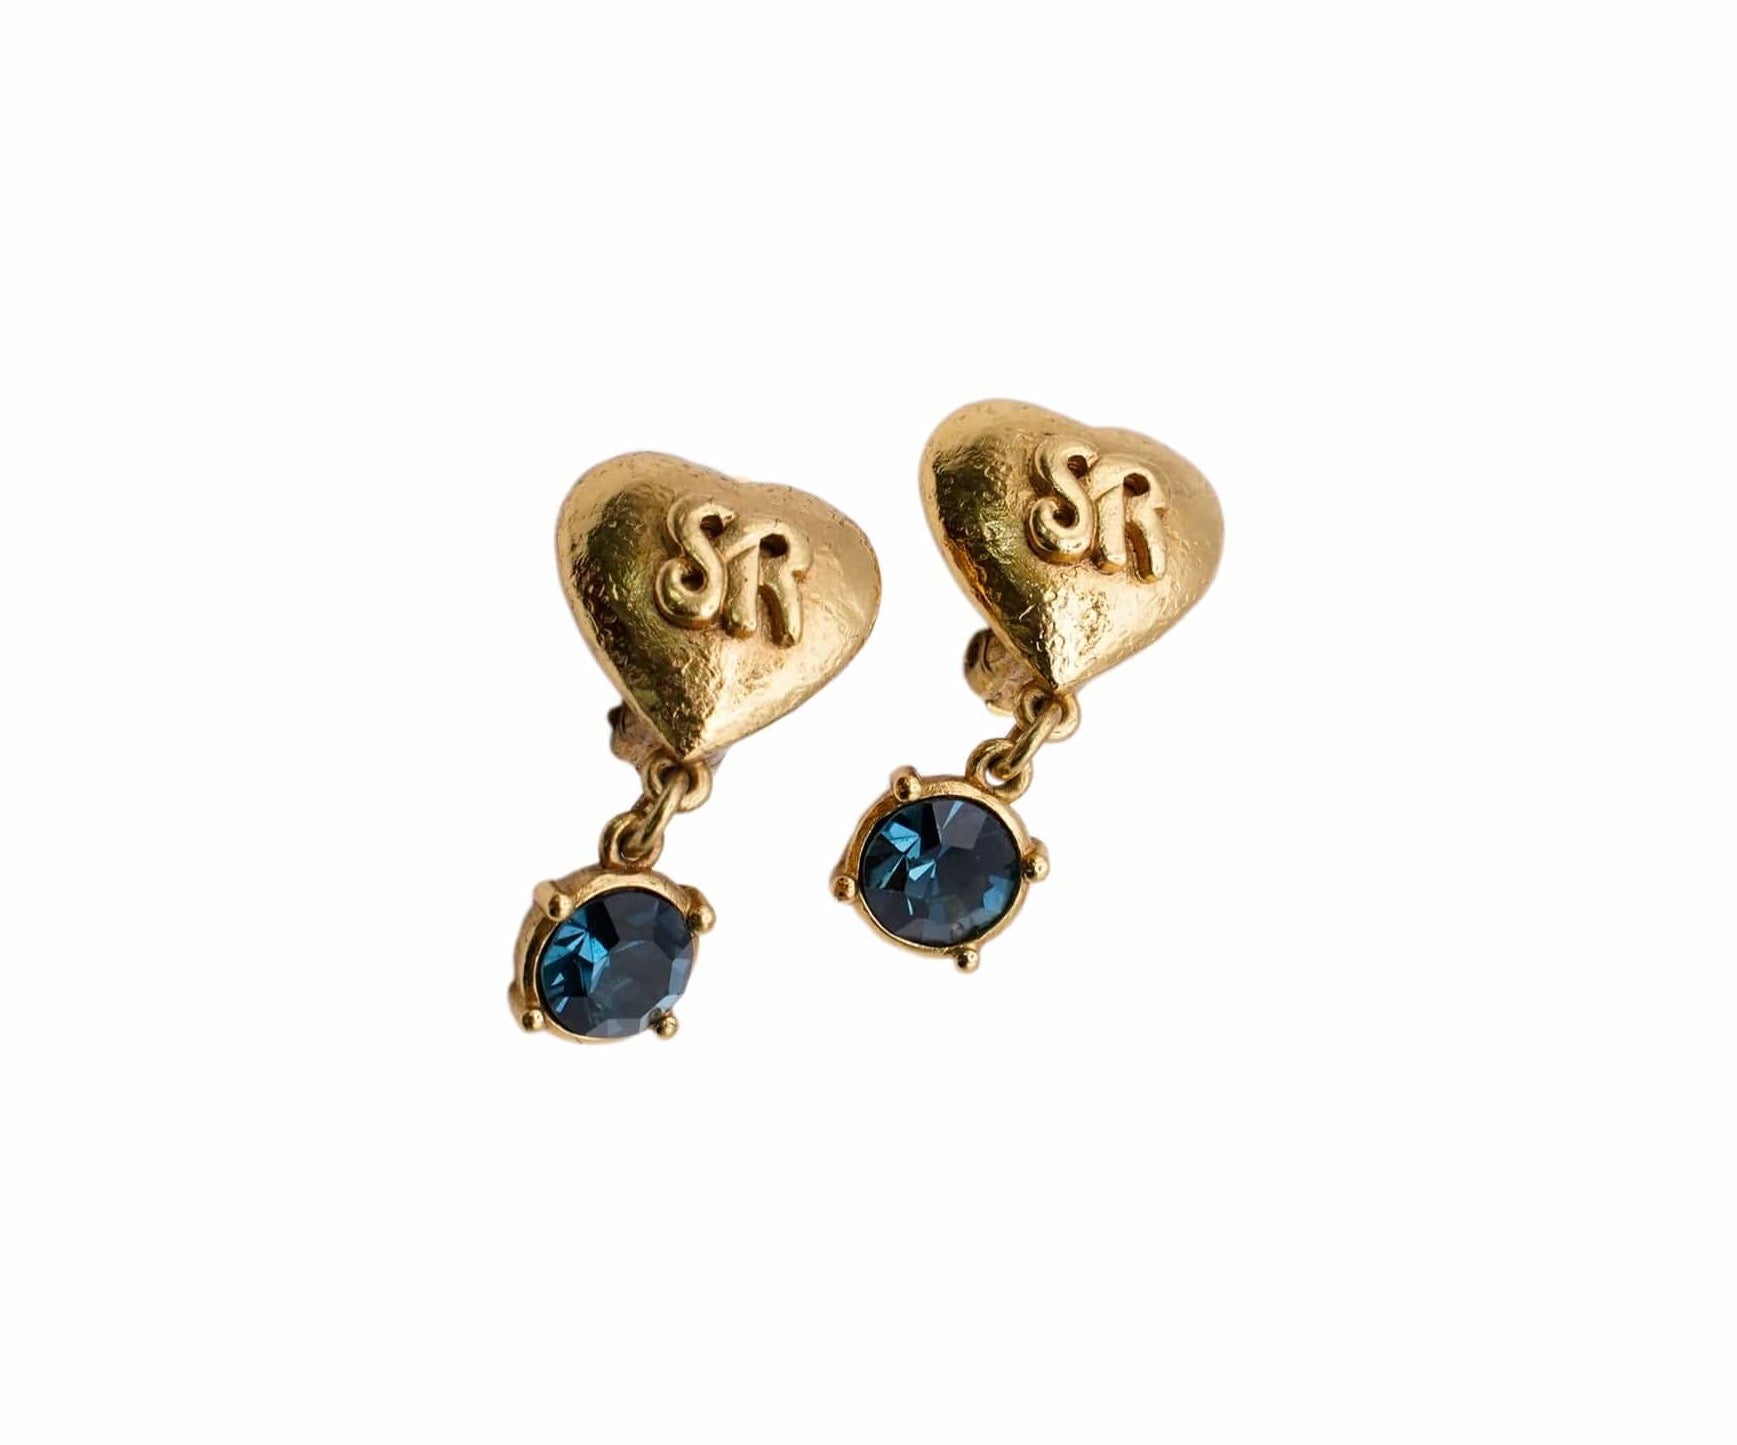 Sonia Rykiel sonia rikyel heart and bleu earrings AWL4511